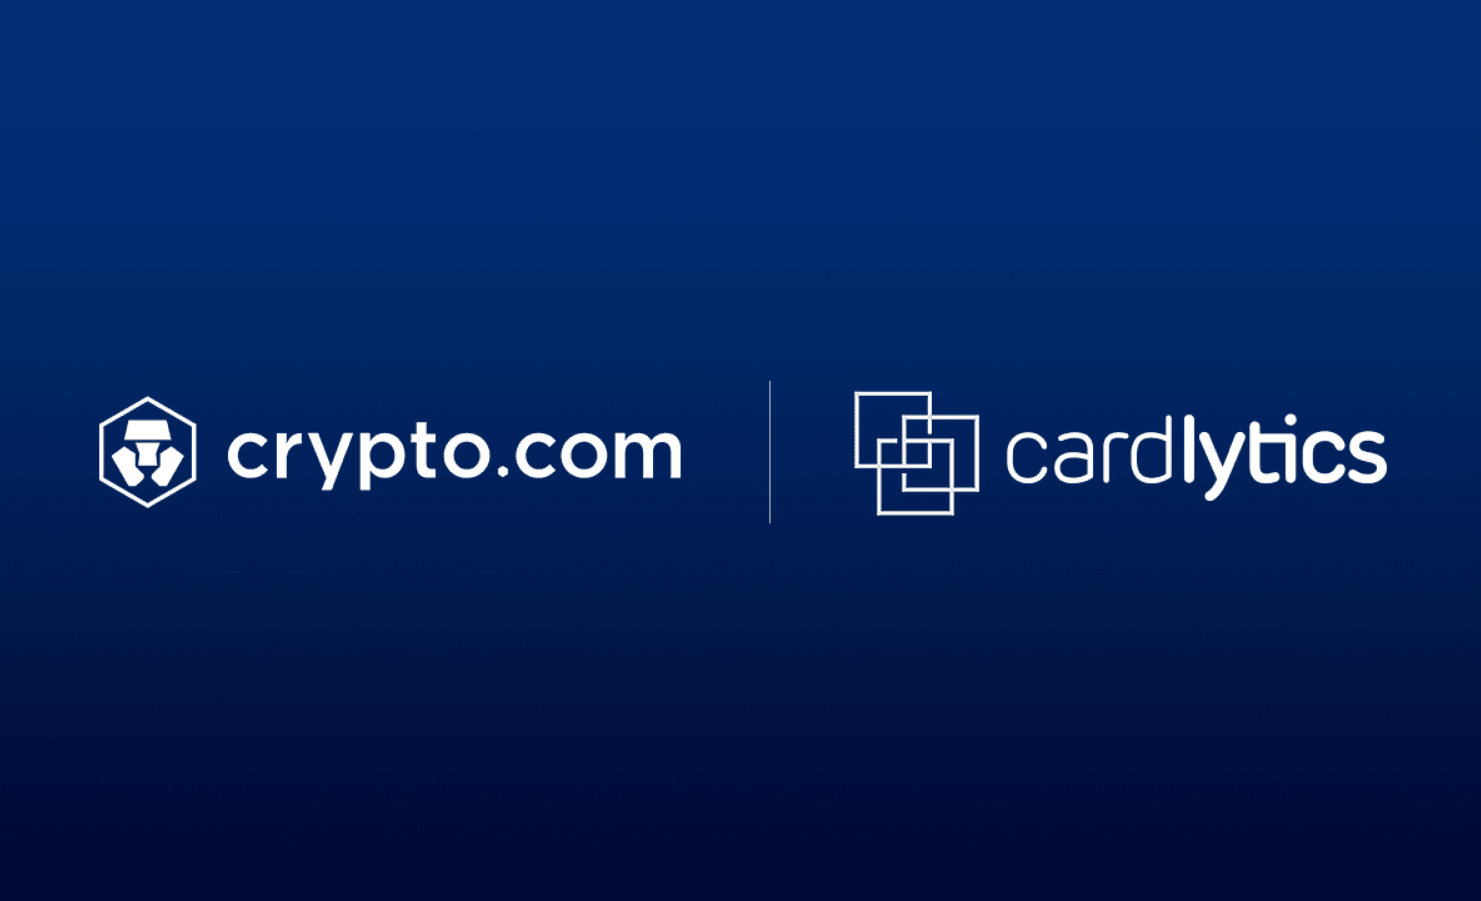 Cardlytics Partner with Crypto.com To Provide Up To 10% Cashback Rewards